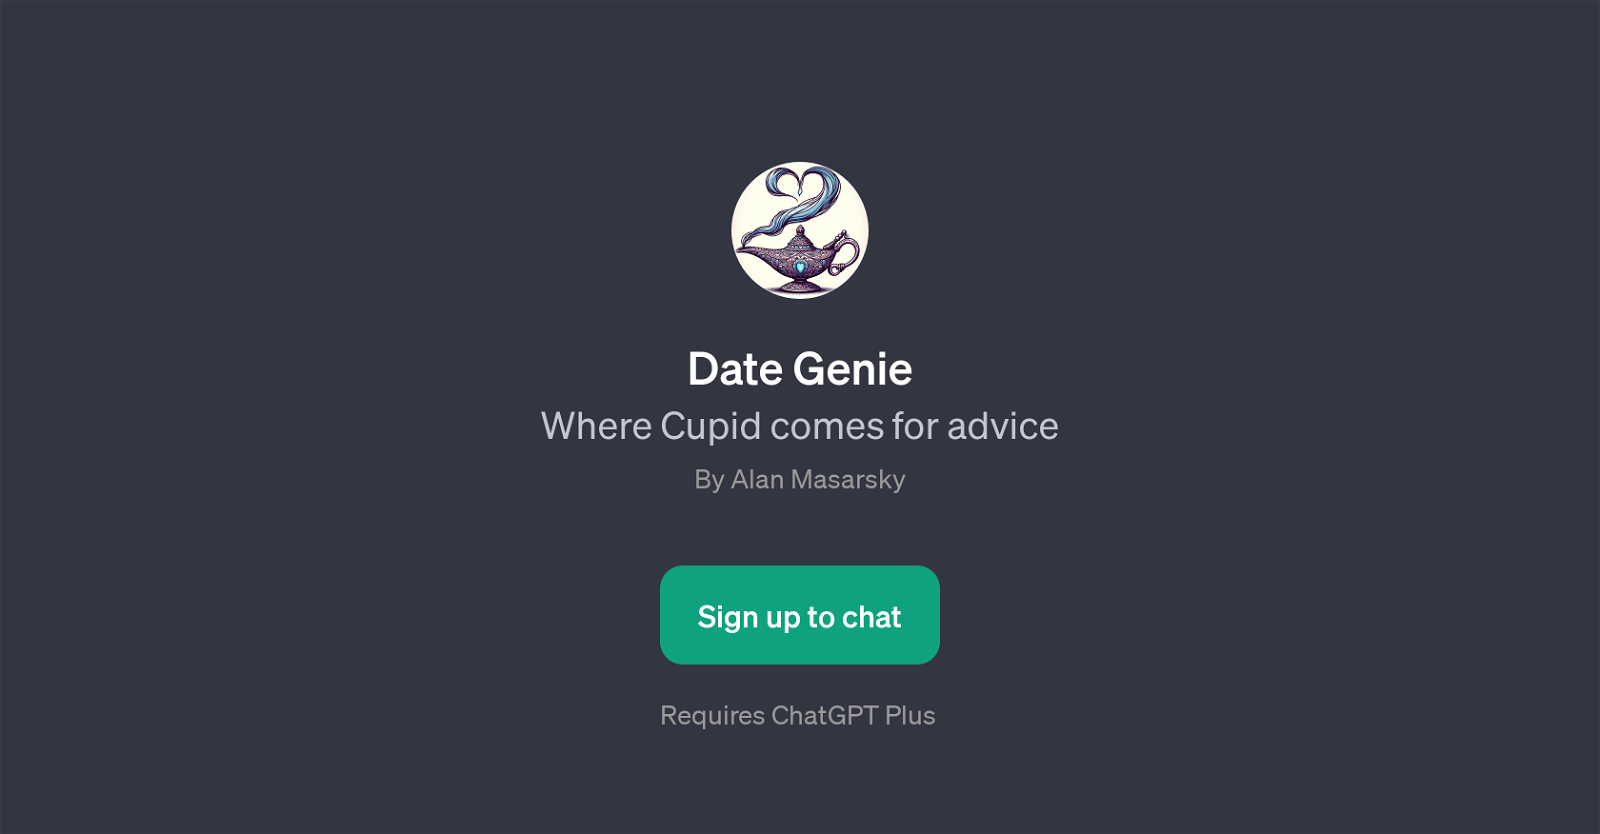 Date Genie website